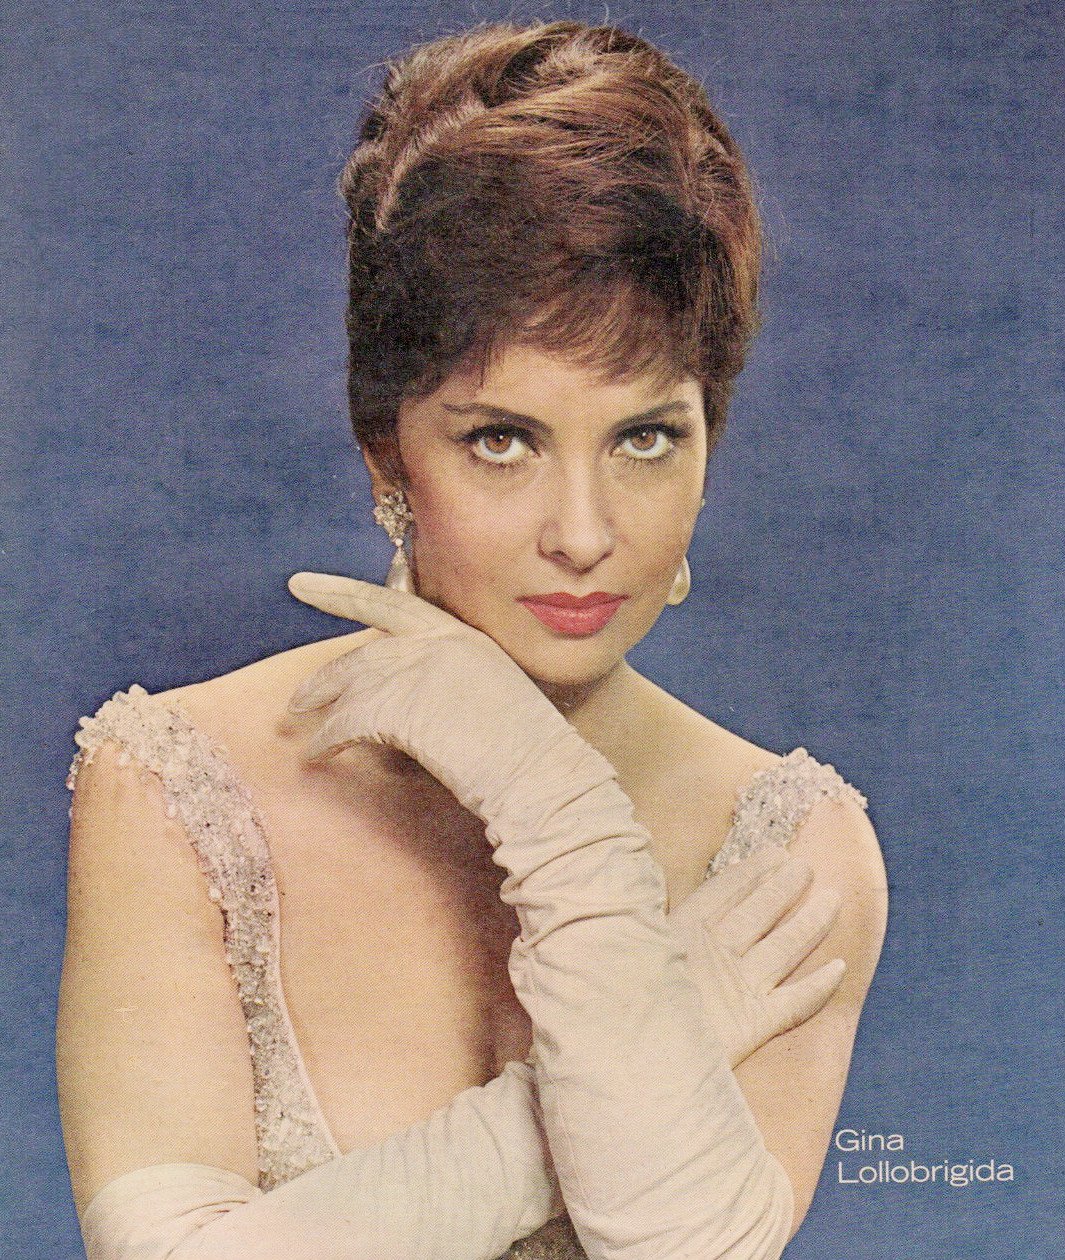 Photo de Gina Lollobrigida tirée de la couverture du magazine New York Sunday News en 1963. | Source : Wikimedia Commons.   